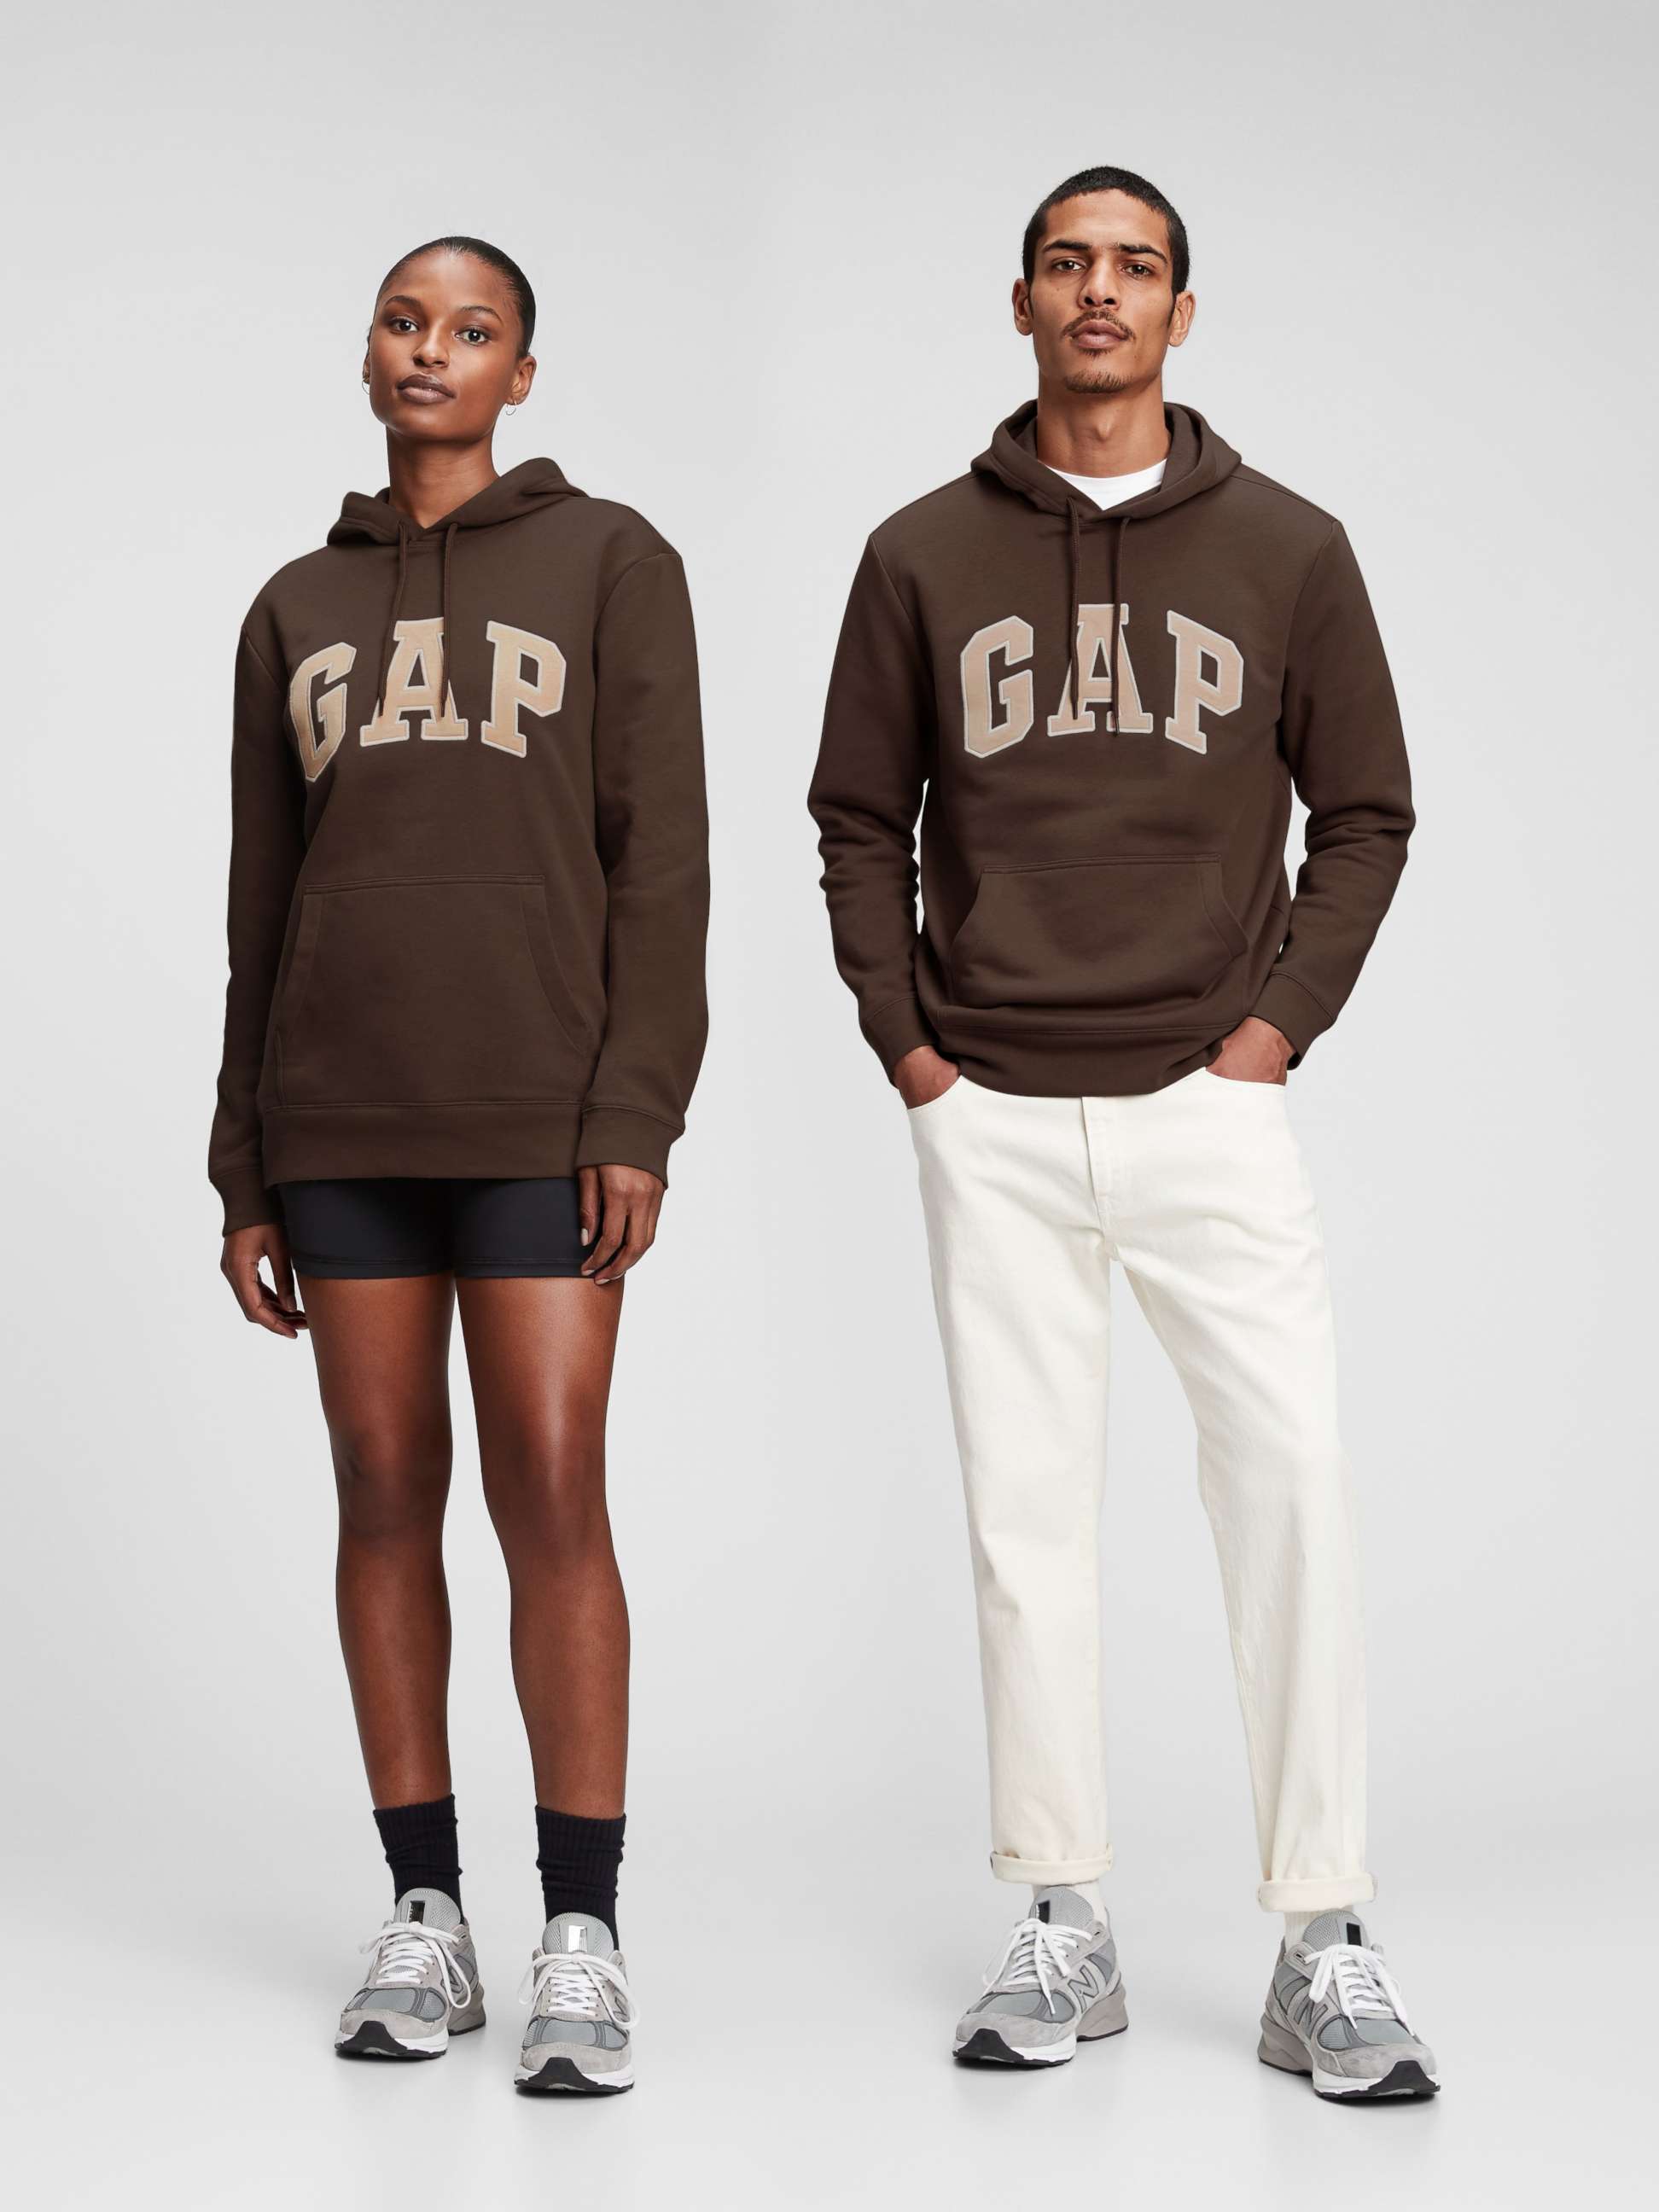 PHOTO: Gap is bringing back its classic Tik-Tok famous brown logo hoodie. 